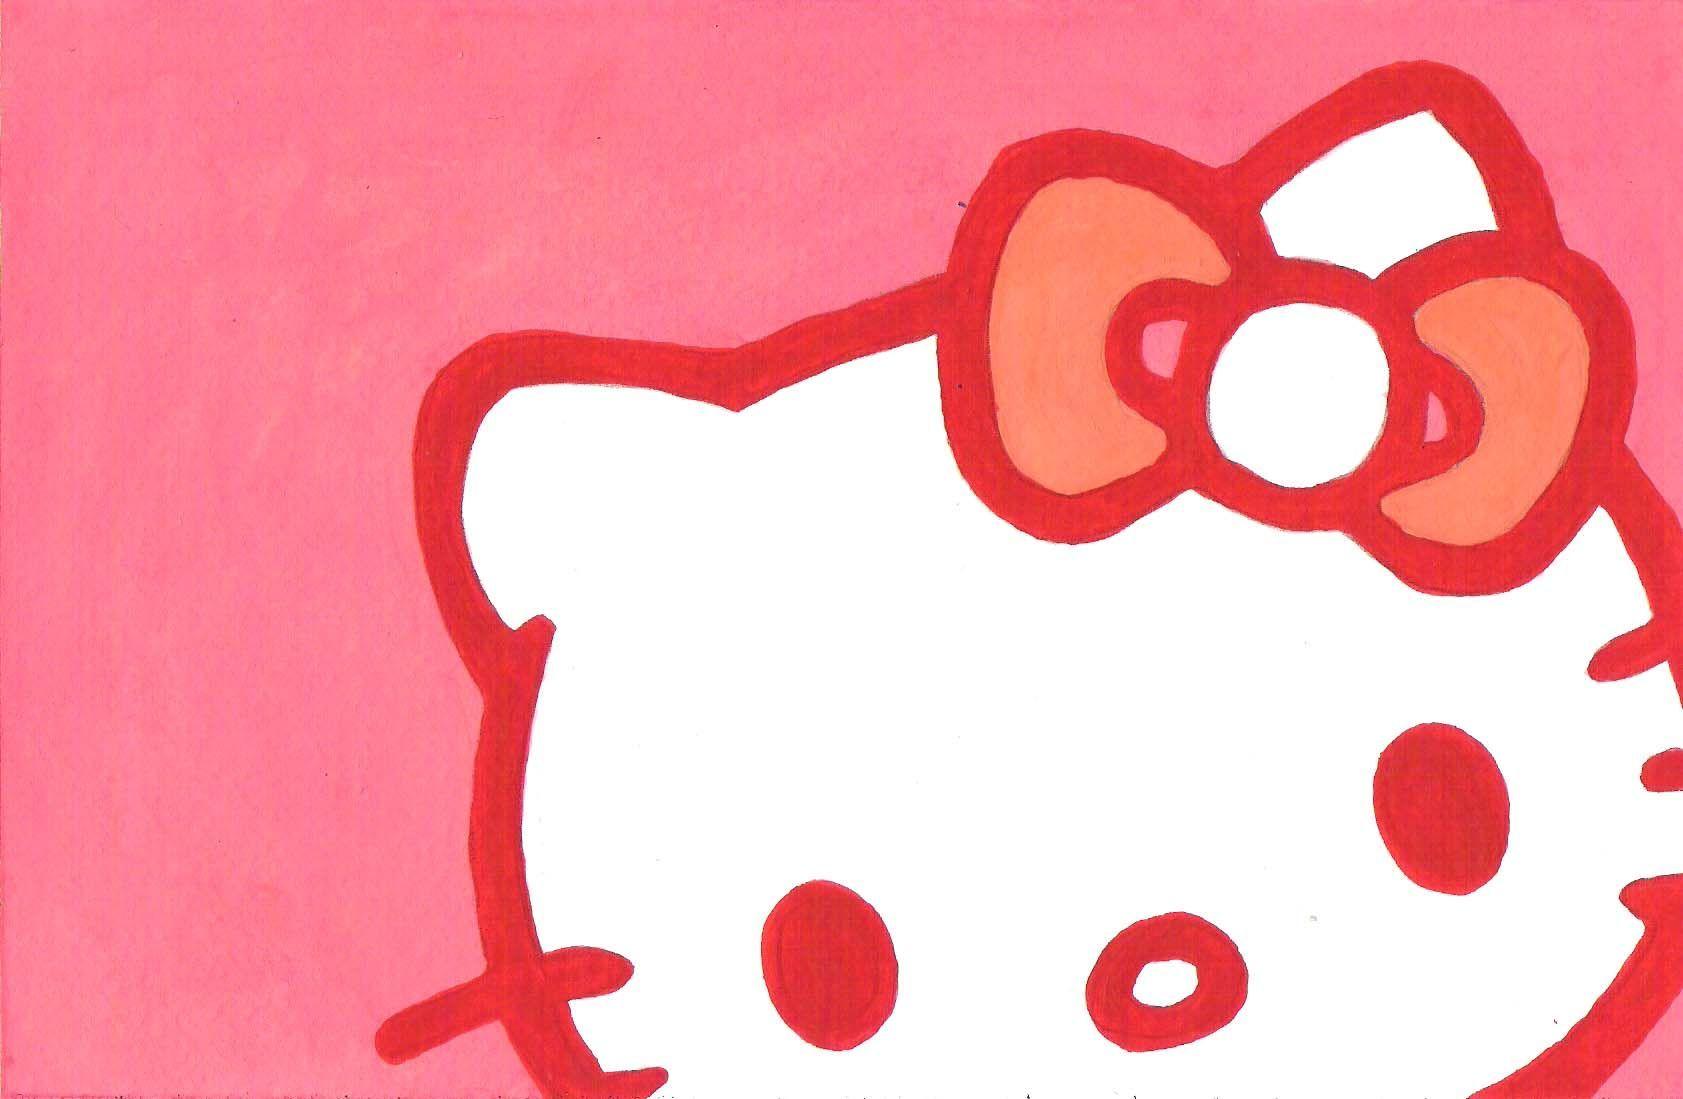 Top 23 Best Hello Kitty Wallpapers For Desktop PC Laptop Computer  4k  HD 